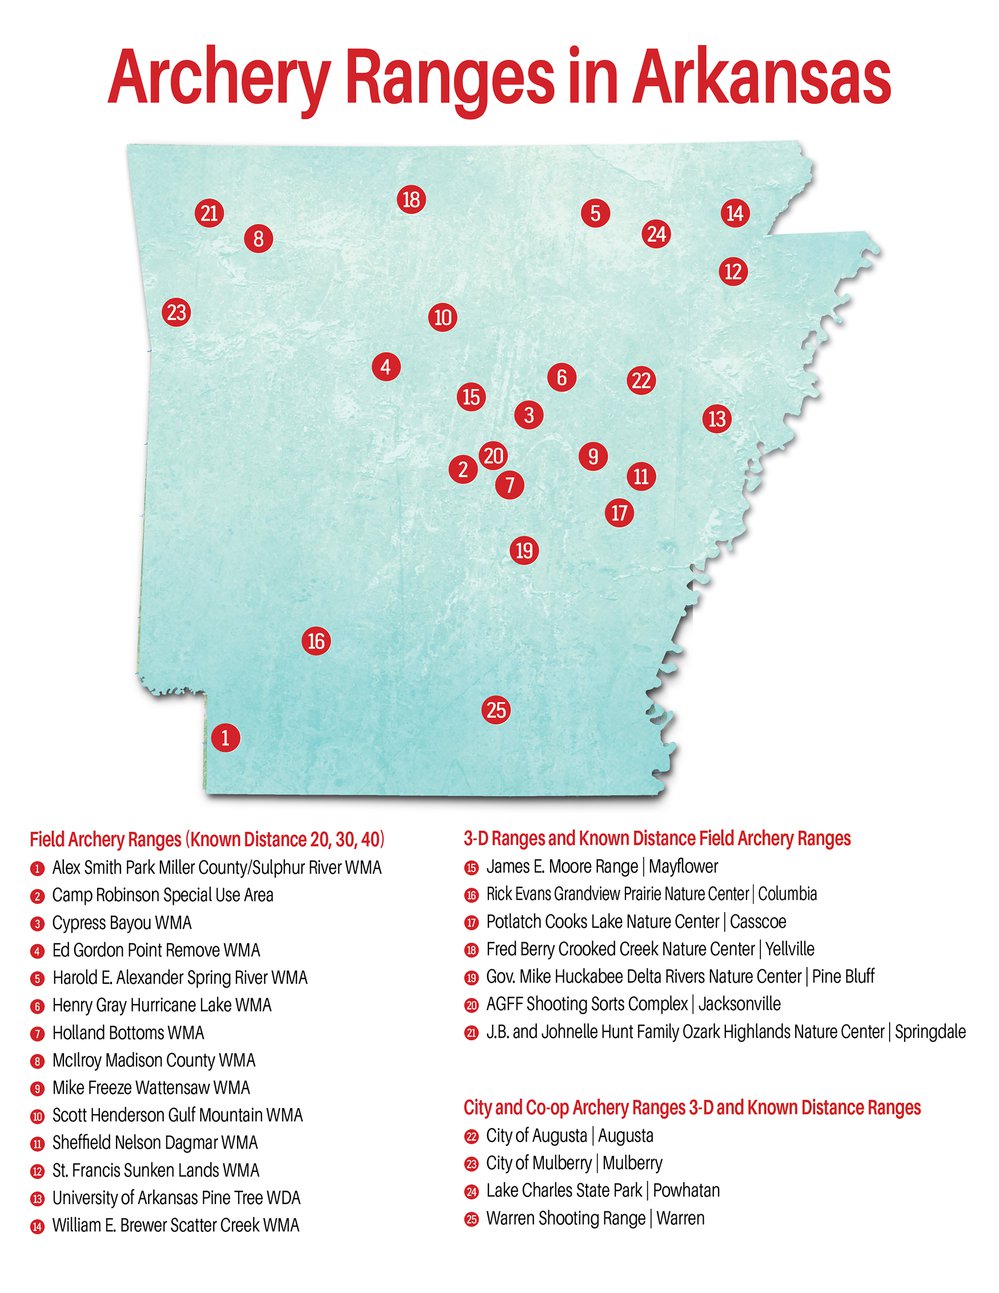 Archery Range Locations in Arkansas Map